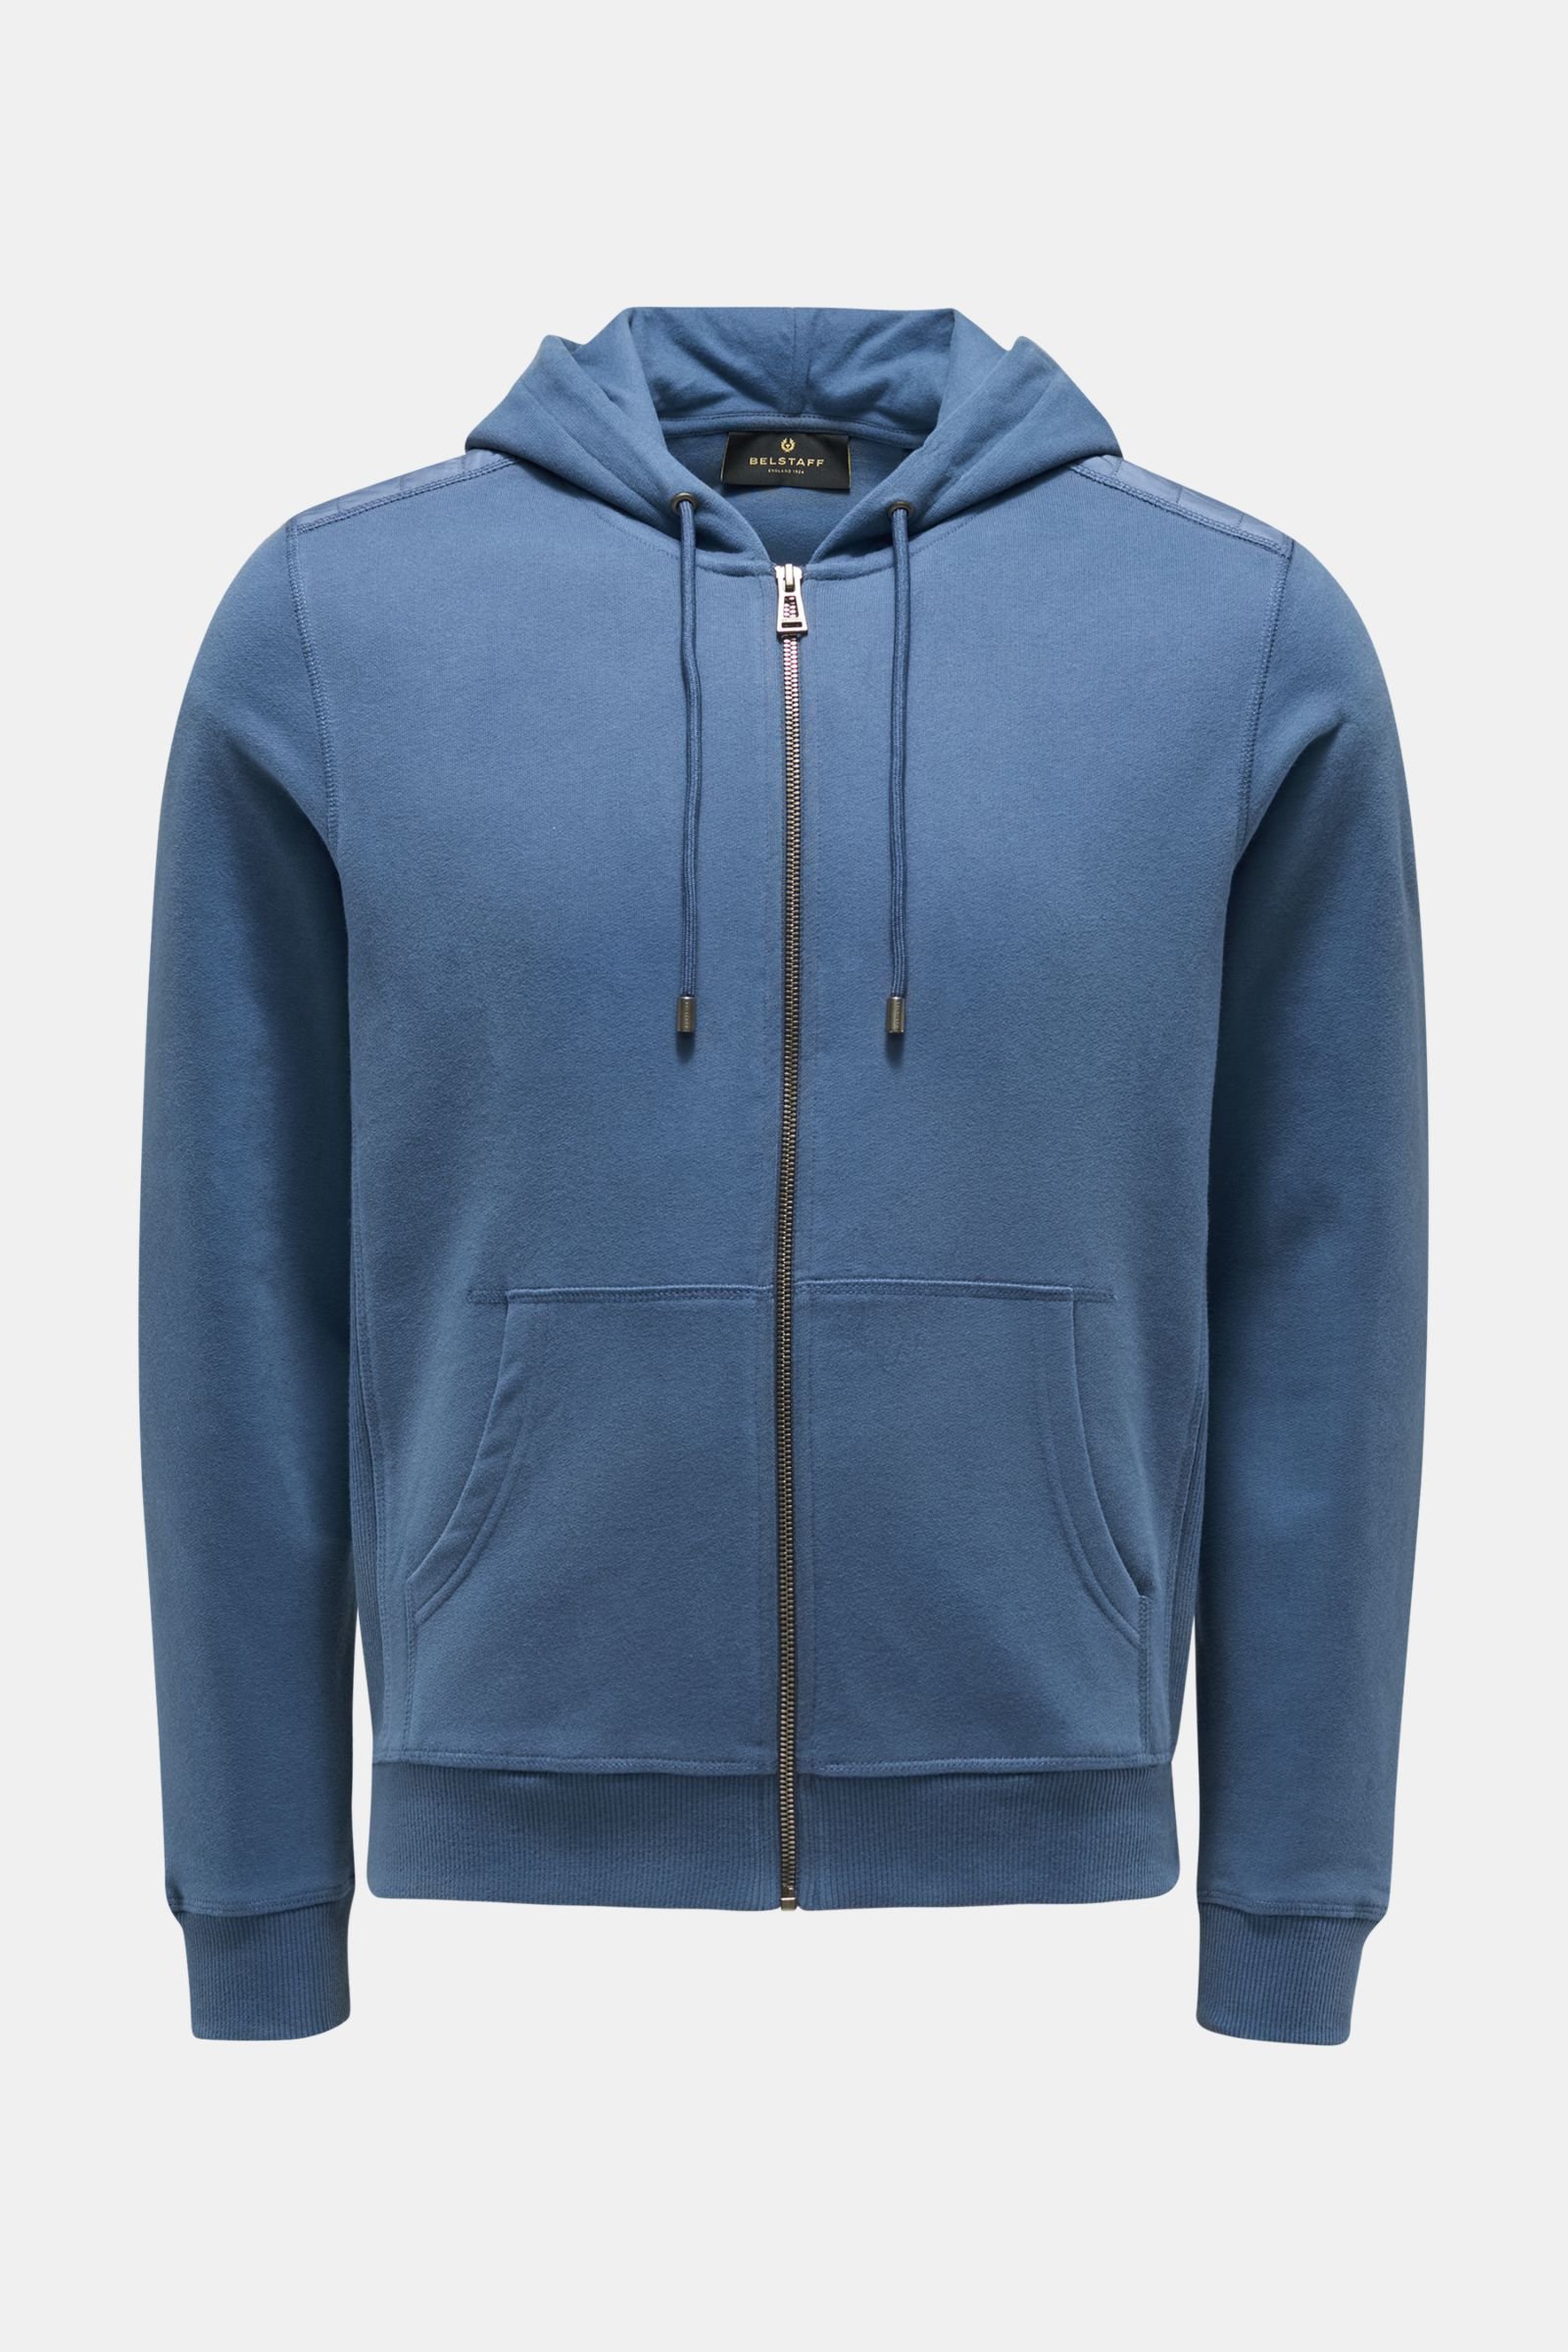 Sweat jacket 'Jessop' grey-blue